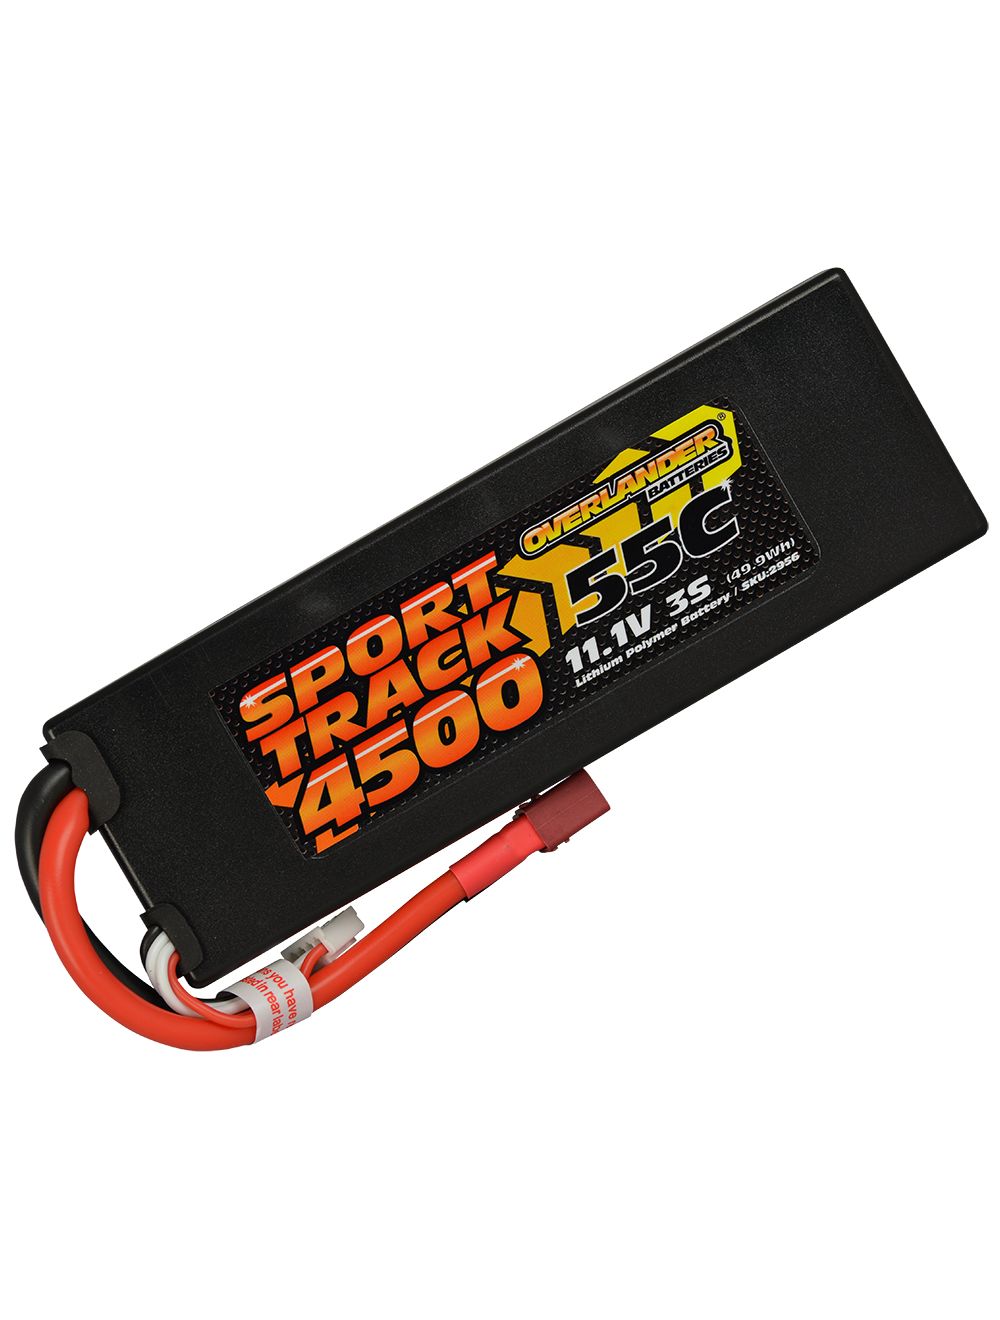 Overlander 4500mAh 11.1V 3S 55C Hard Case Sport Track LiPo Battery - EC5 Connector 2956